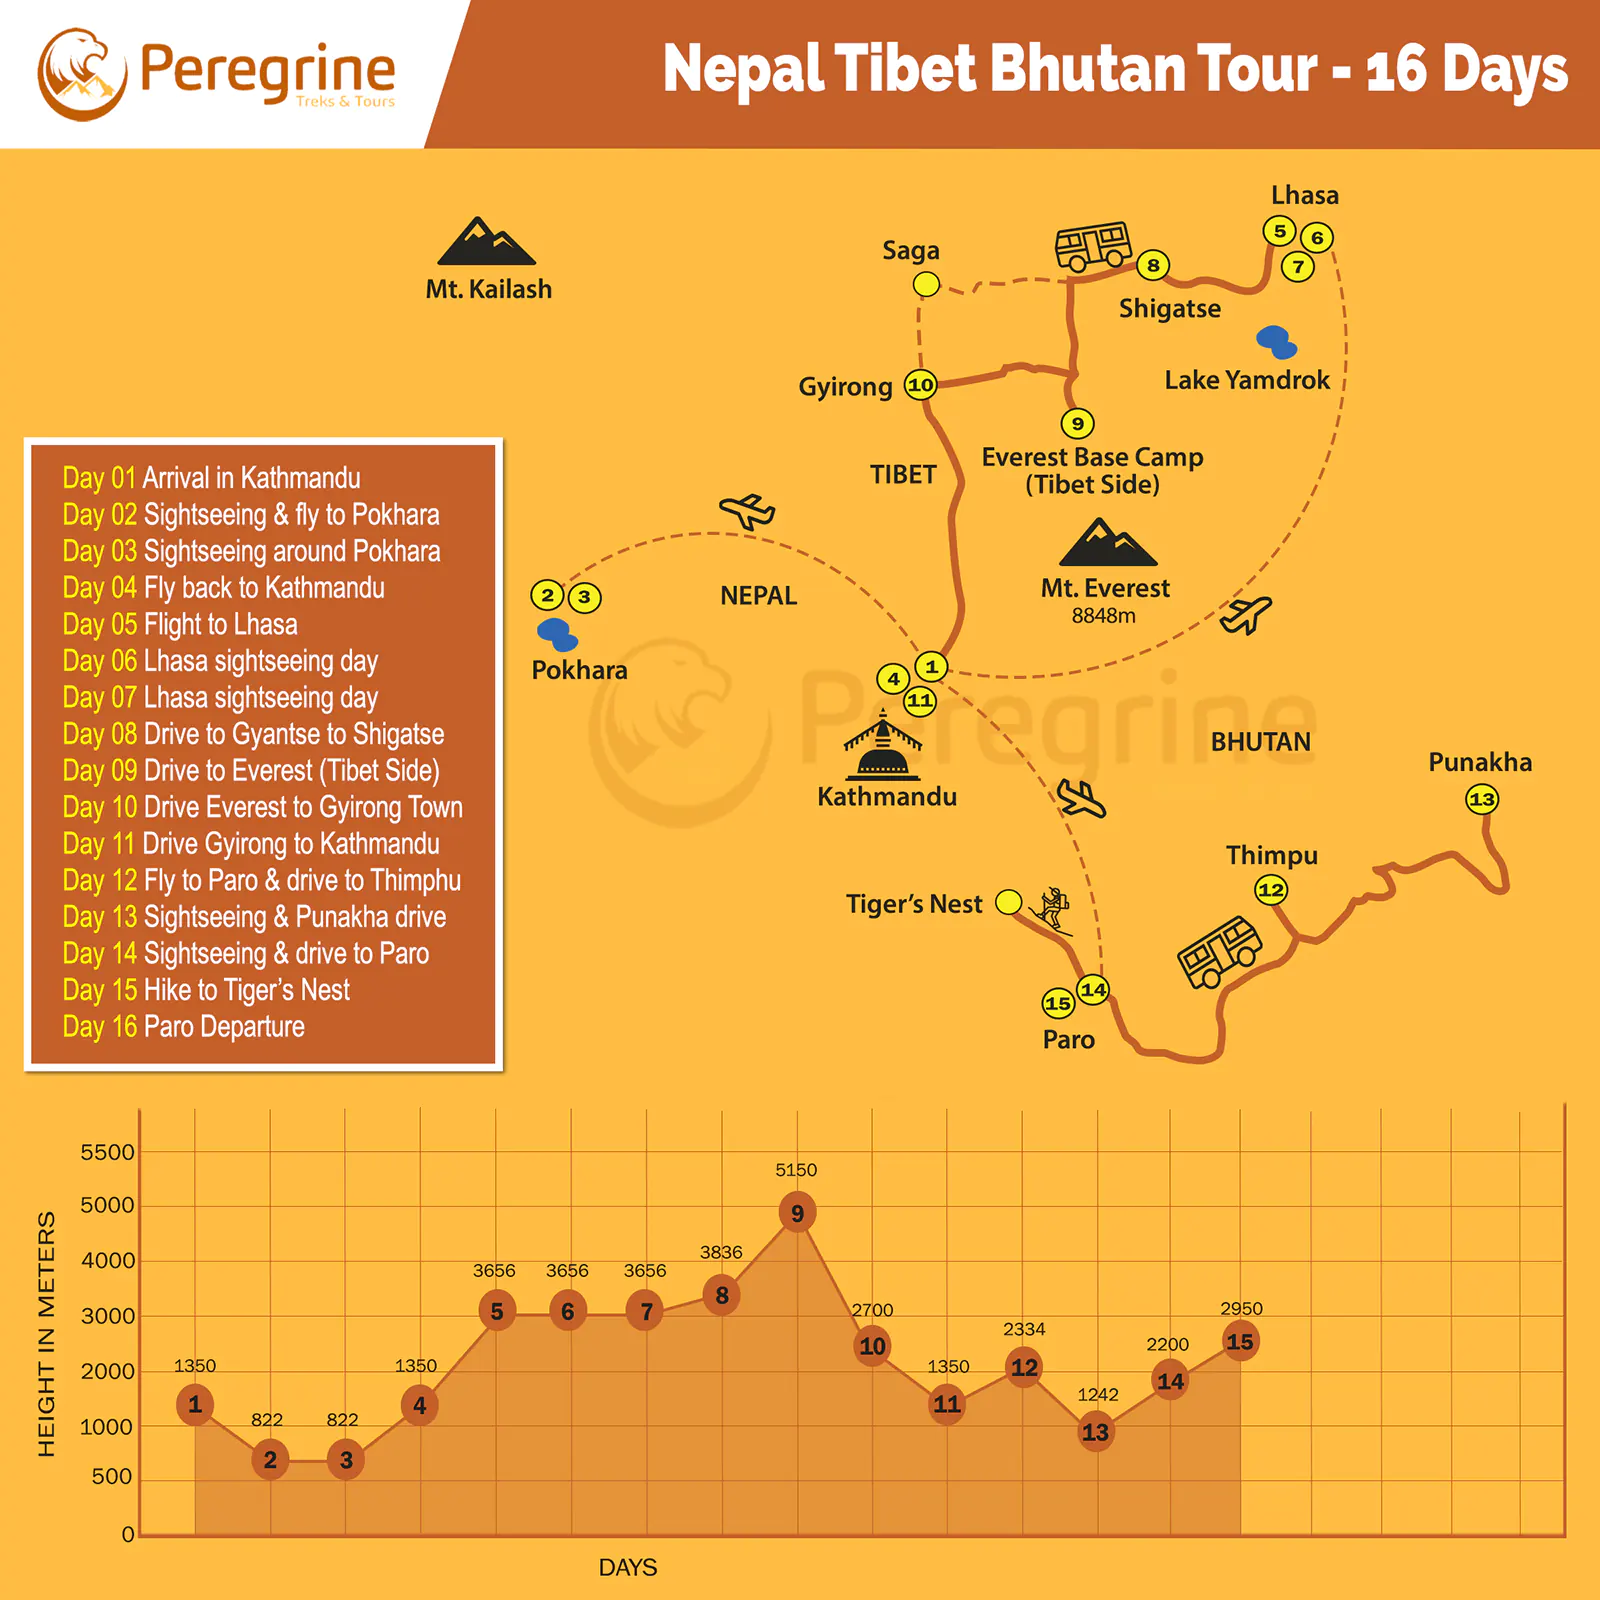 Nepal Tbet Bhutan Tour Map